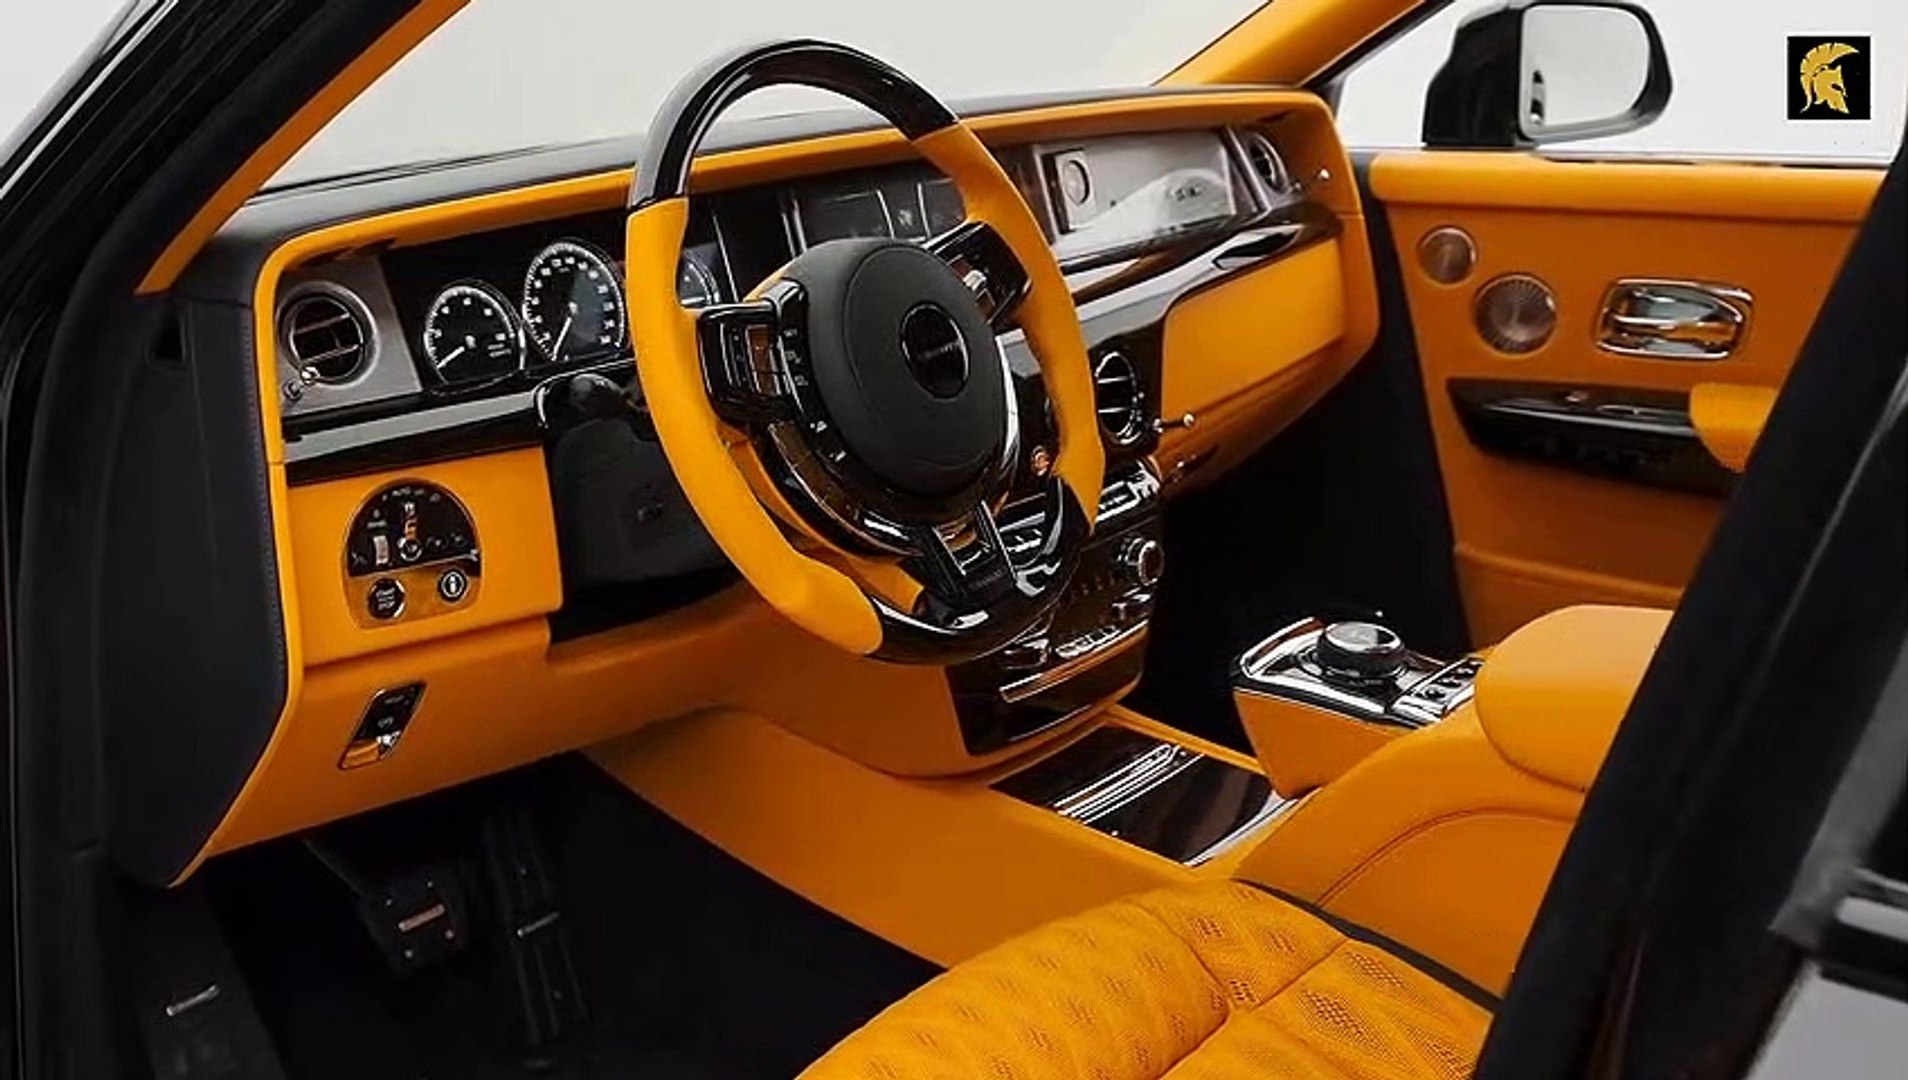 The 2018 Rolls-Royce Phantom Is a $550,000 Ultra-Luxury Car 